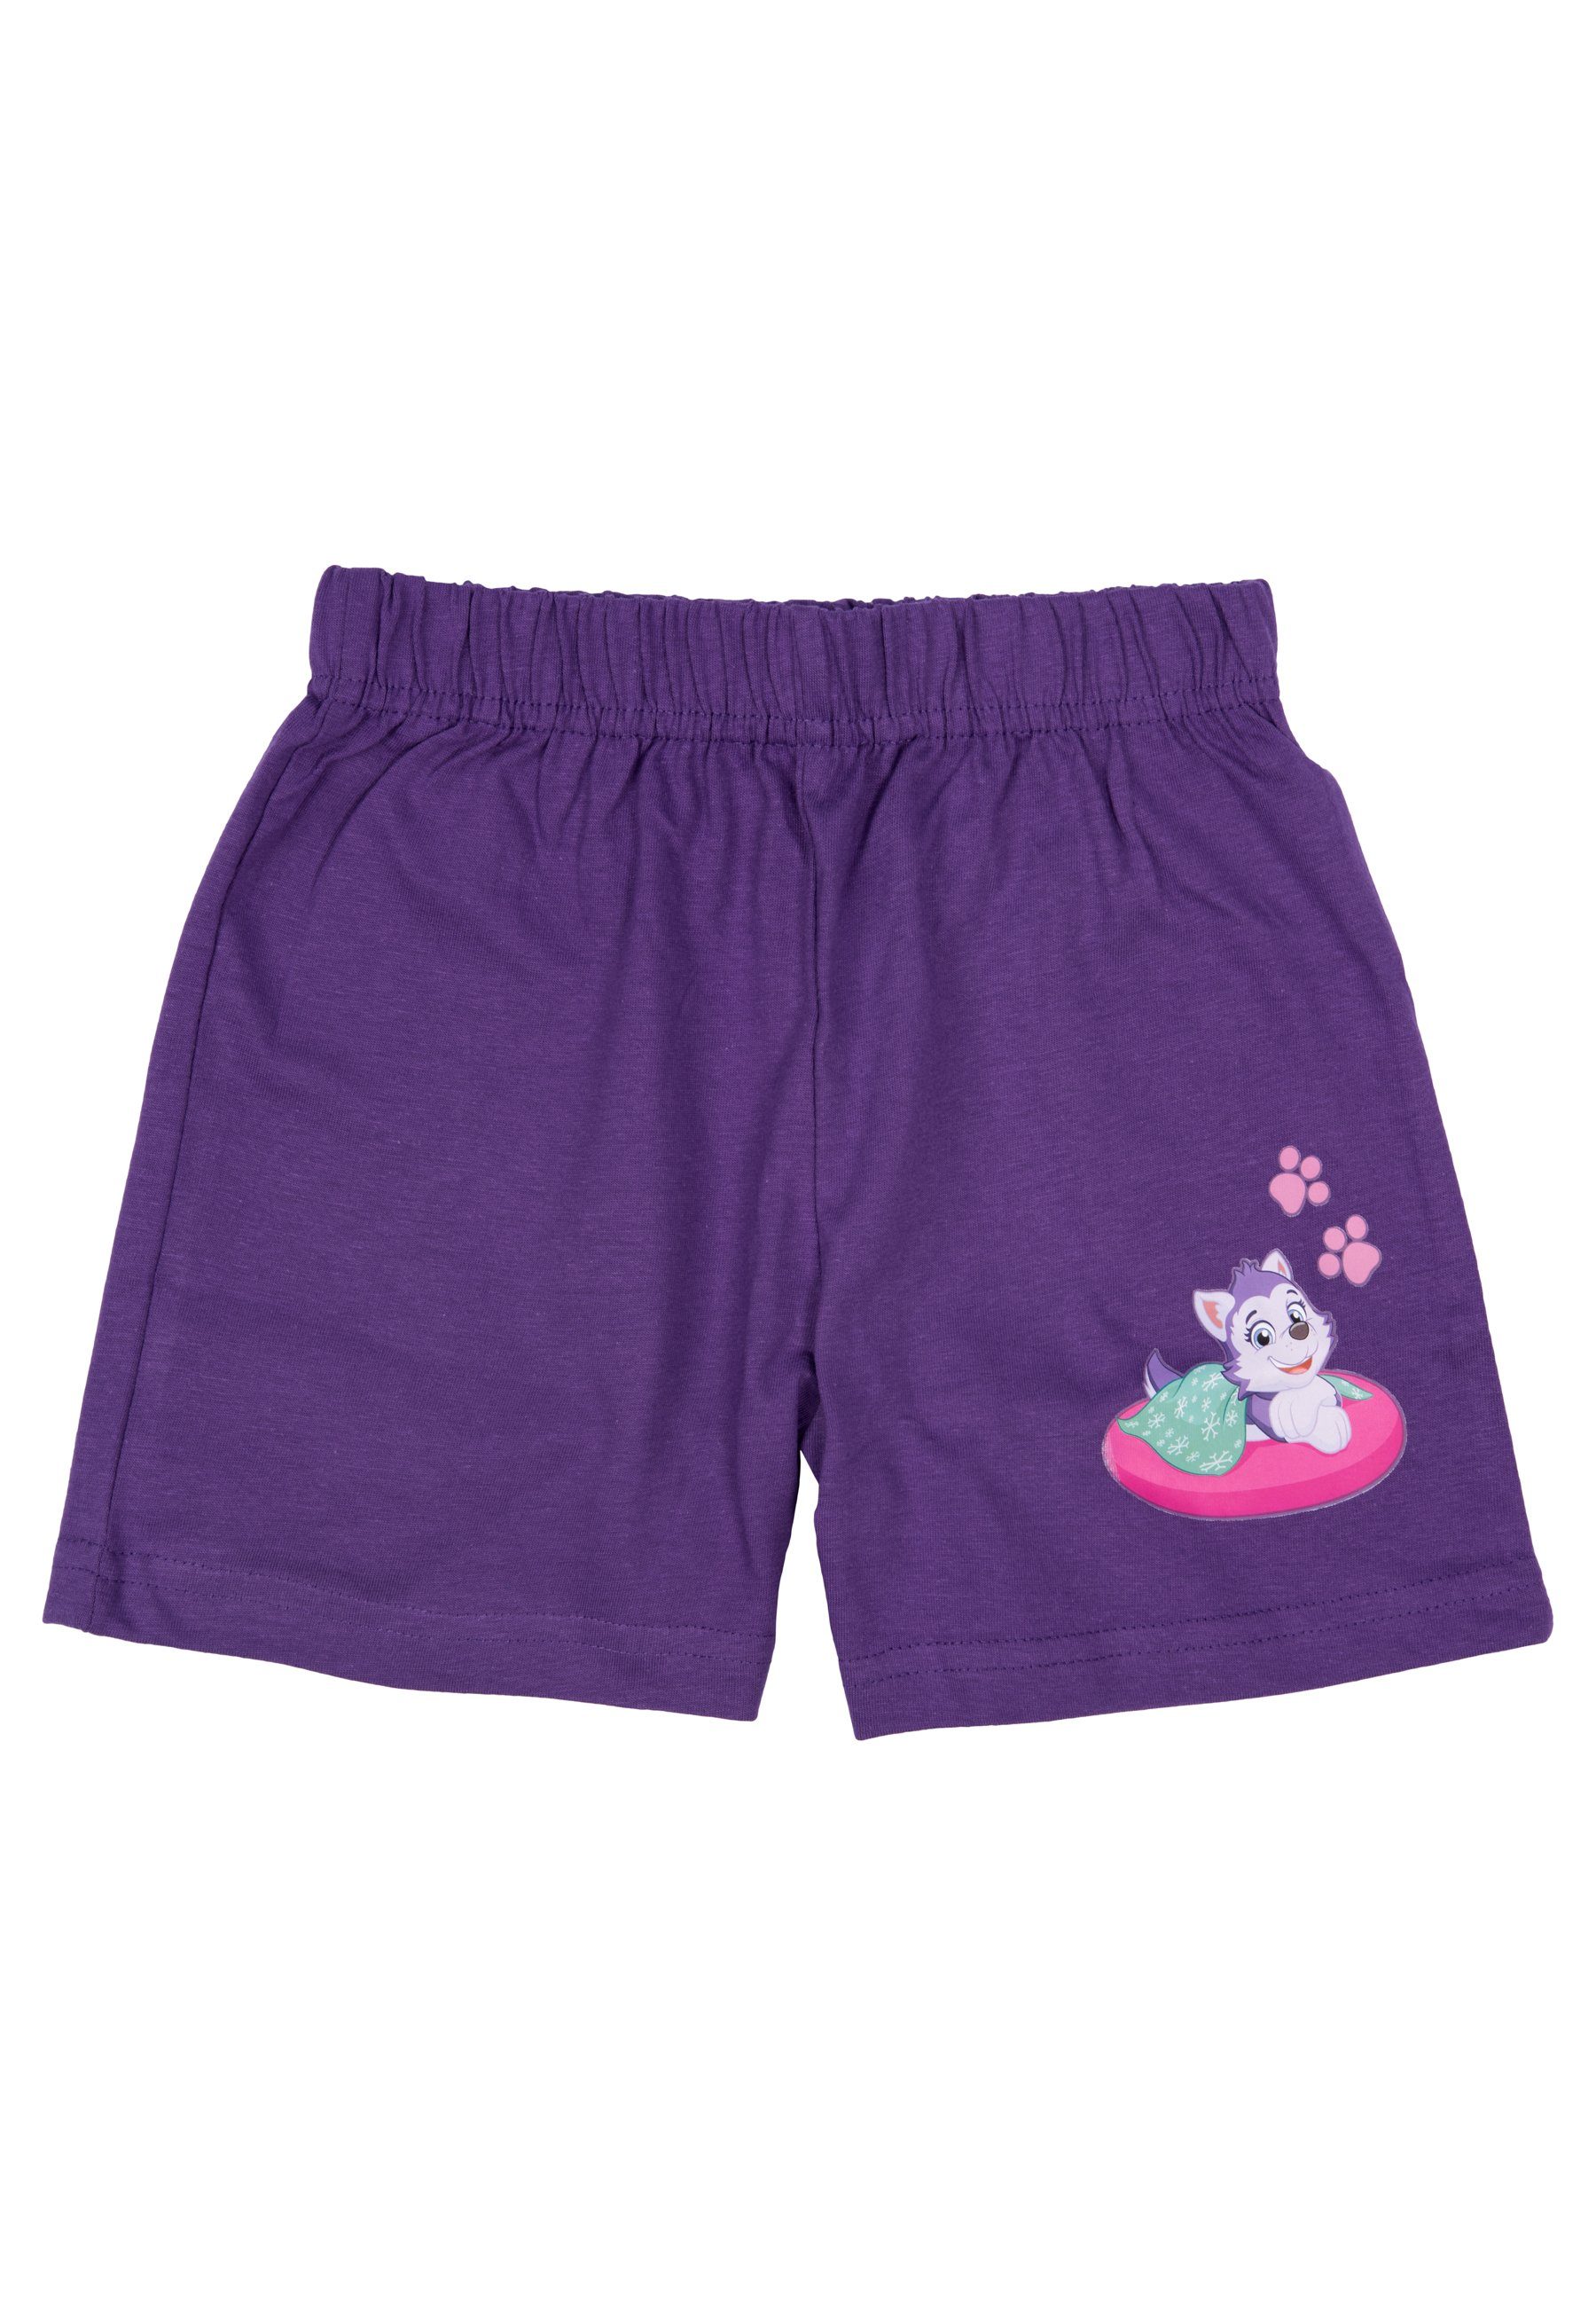 United Labels® Schlafanzug Paw Patrol Set Rosa/Lila - Kurzarm Mädchen für Pyjama Schlafanzug